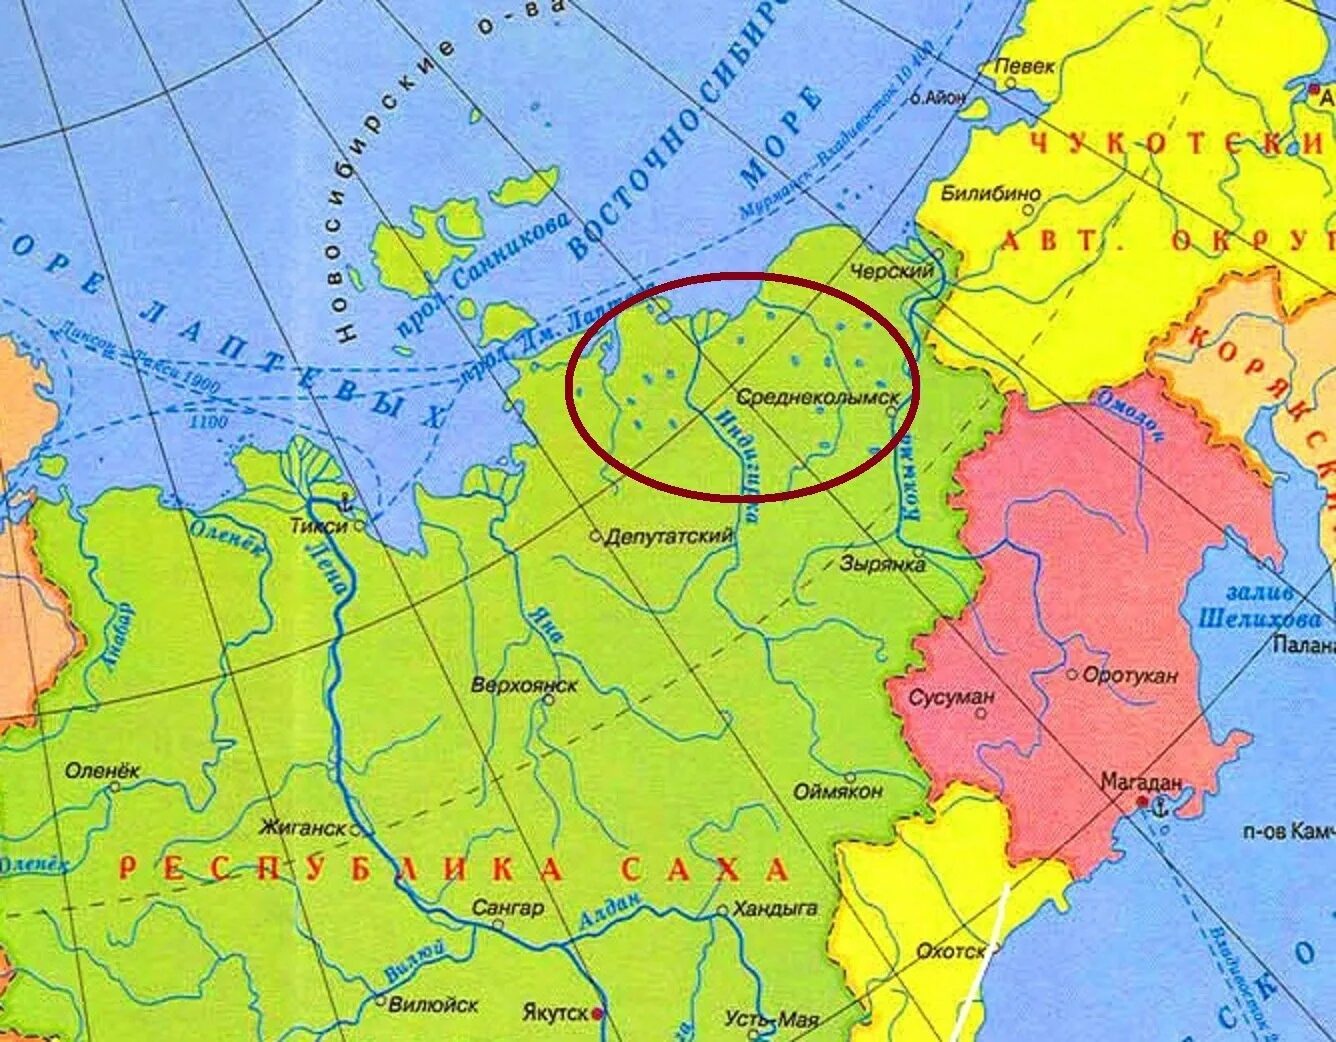 Верхоянск на карте. Верхоянск на карте России. Оймякон на карте. Верхоянск на карте Якутии. Подпишите на карте город якутск